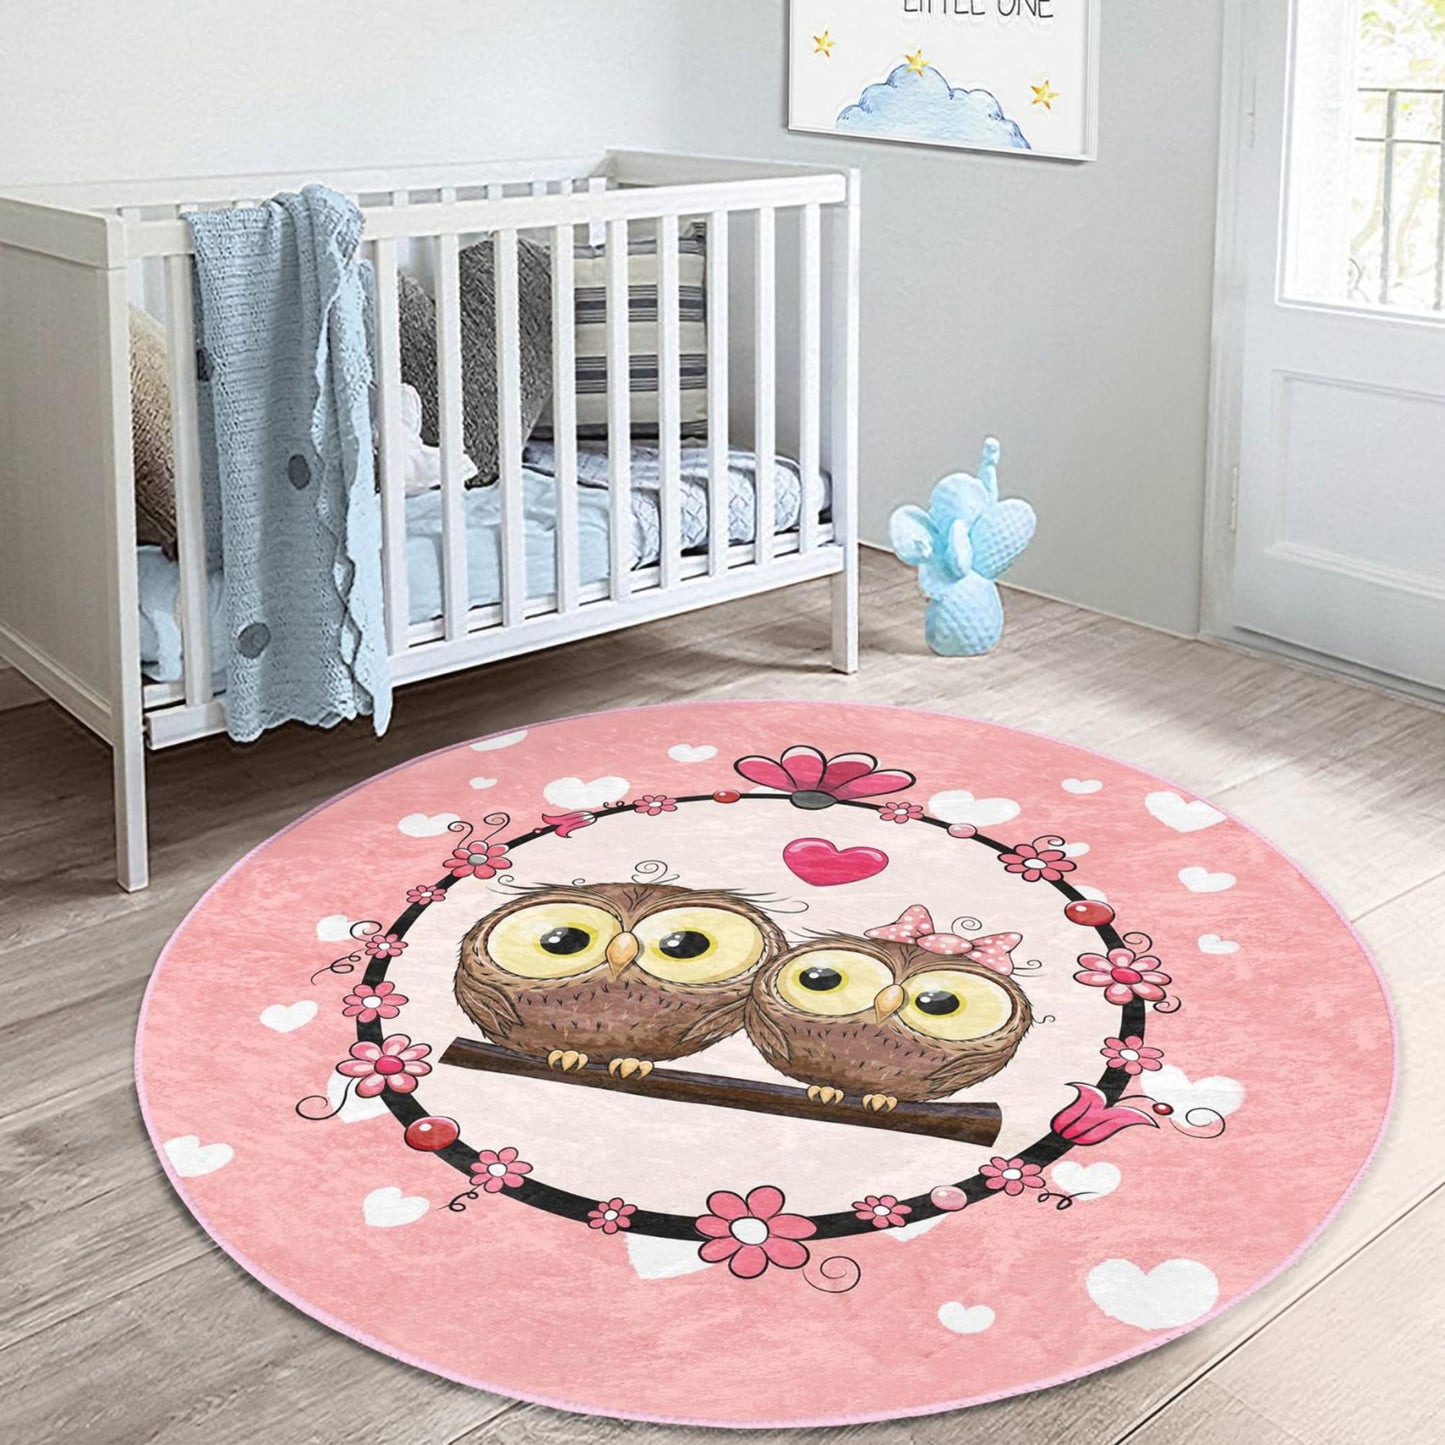 Whimsical kids rug showcasing adorable pink owl loves for playful decor.